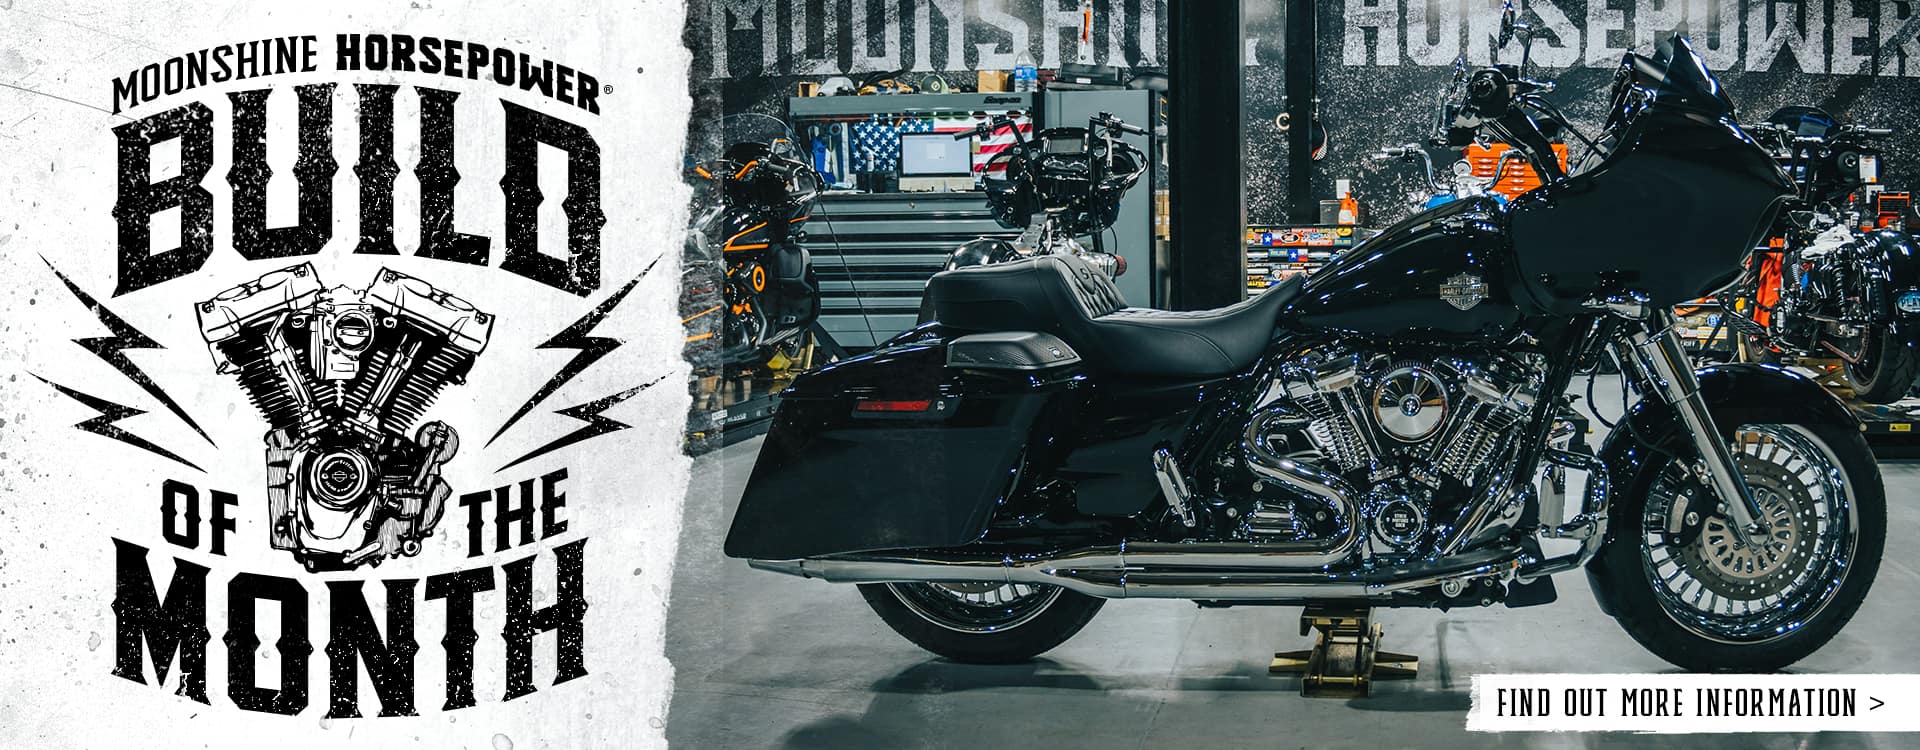 Moonshine Harley Horsepower Build of the Month